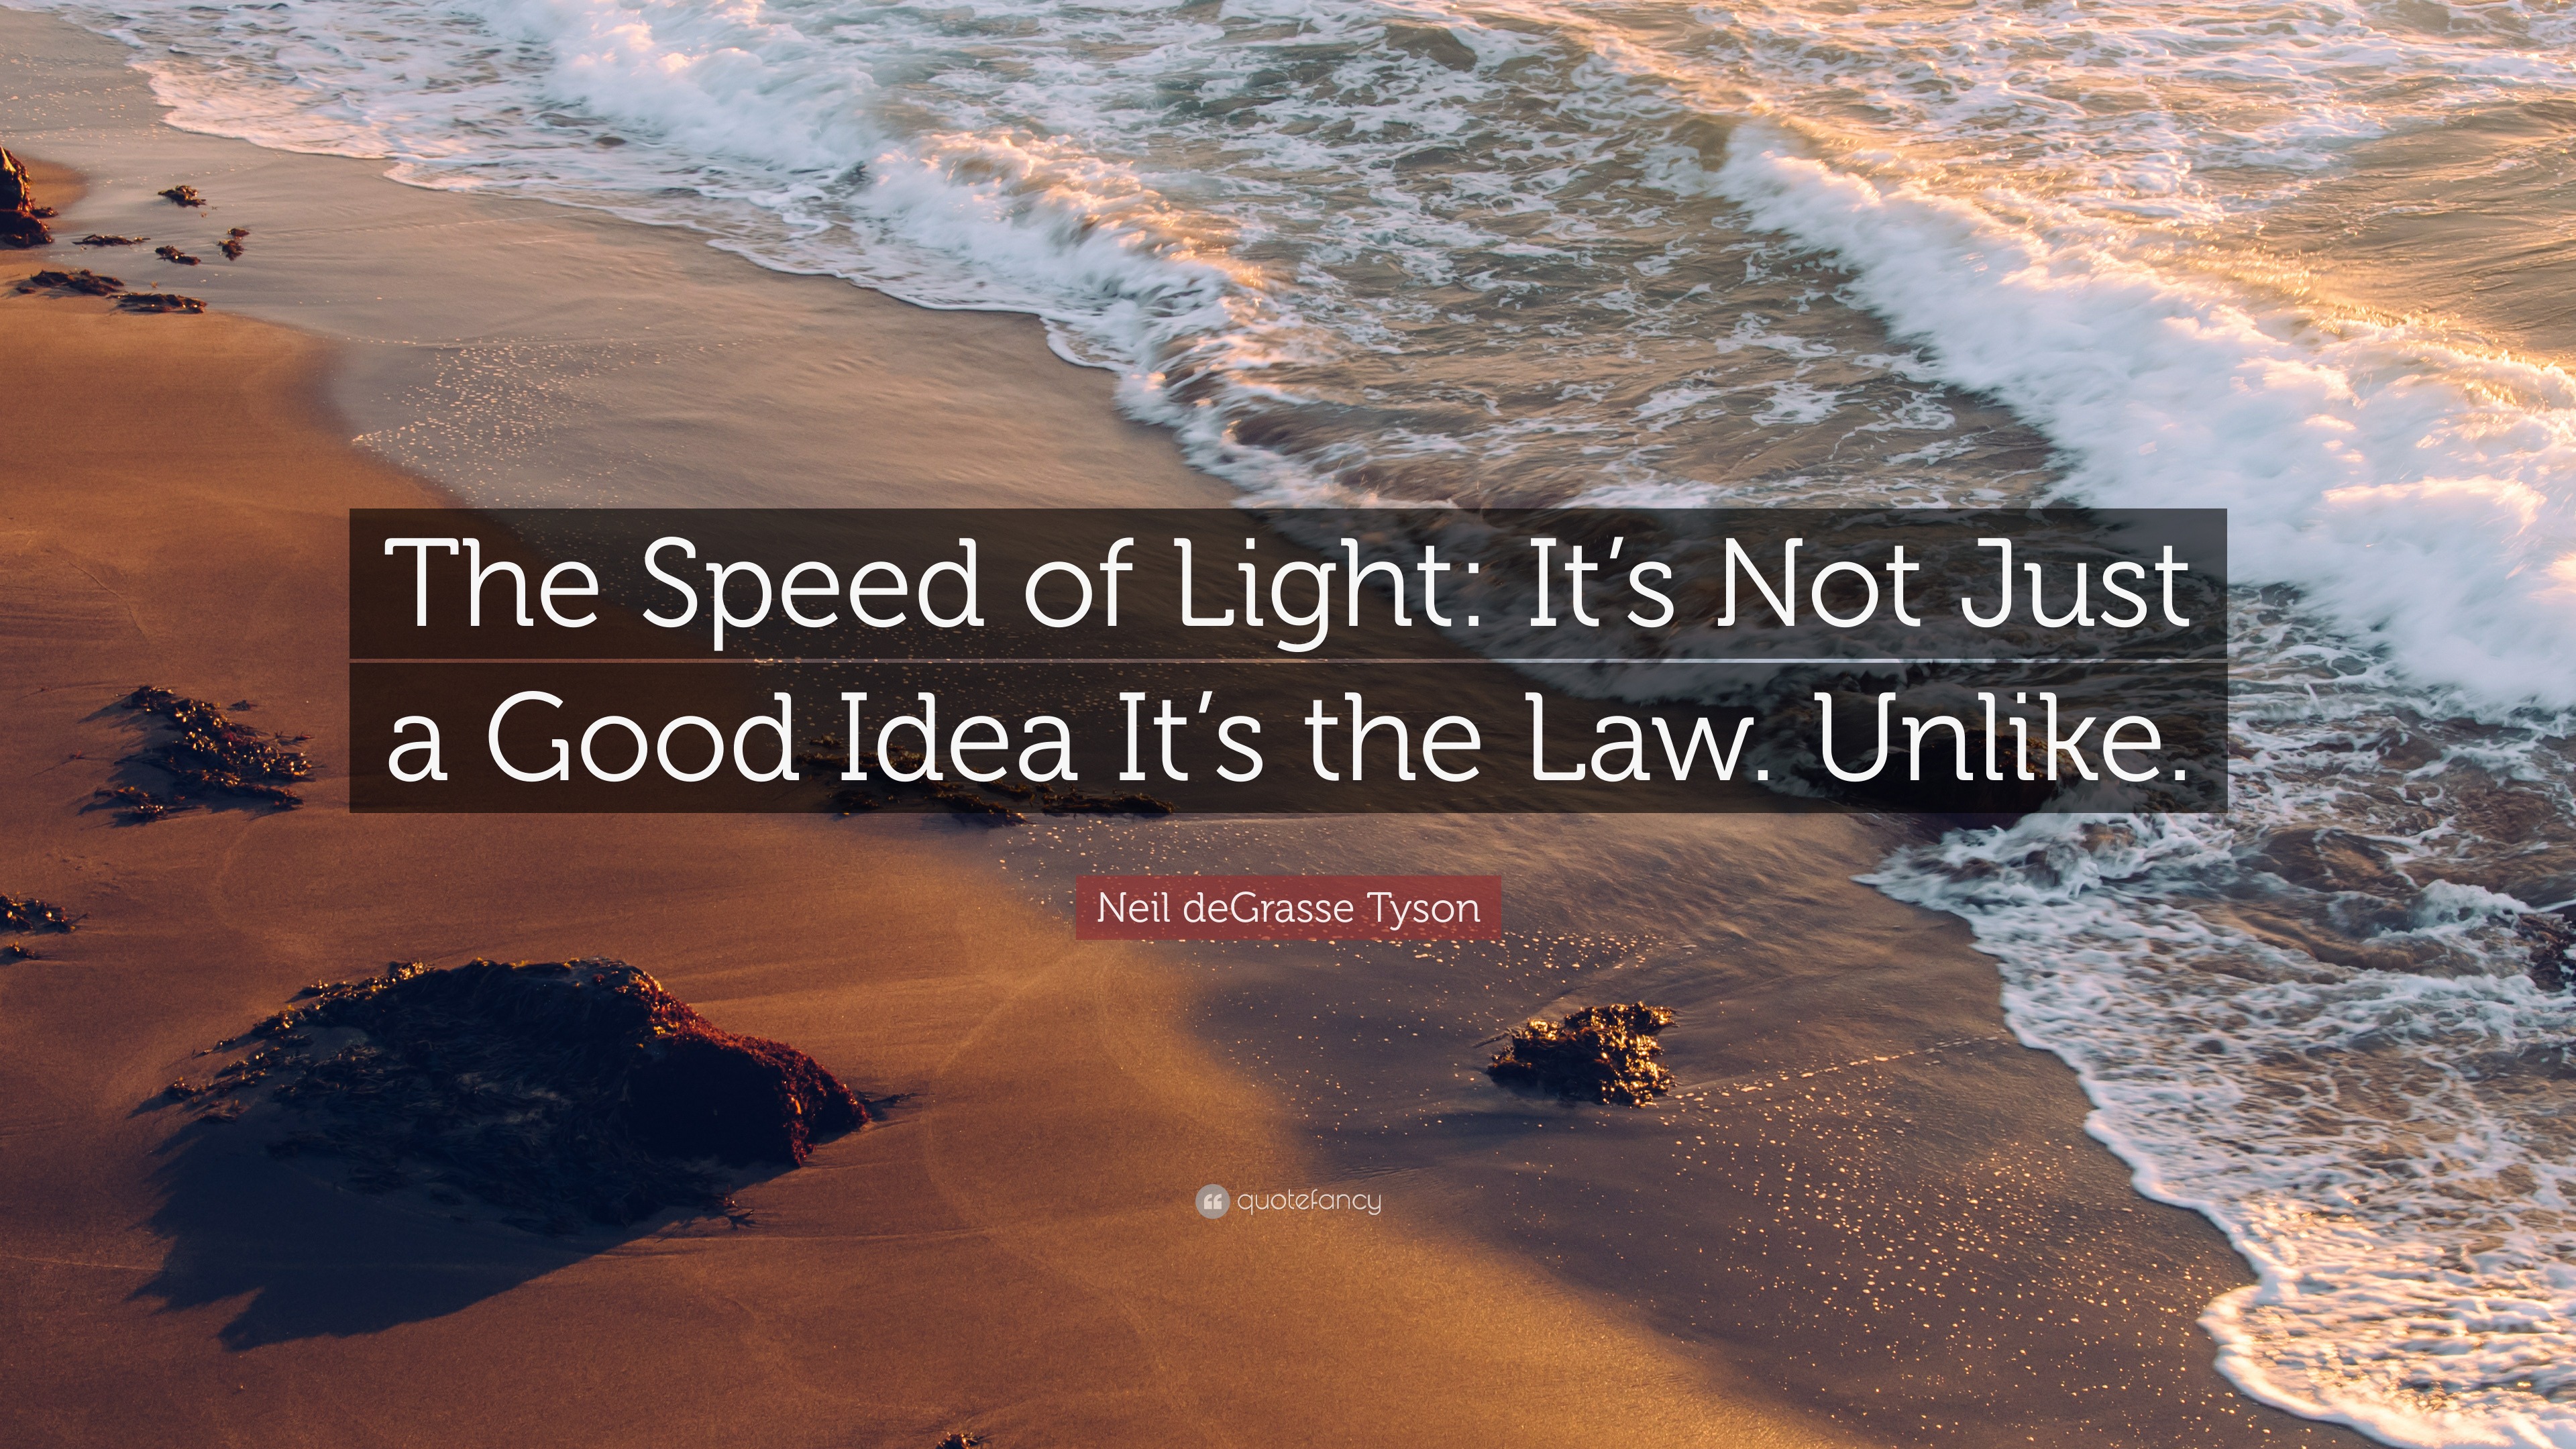 Herre venlig sokker kaffe Neil deGrasse Tyson Quote: “The Speed of Light: It's Not Just a Good Idea  It's the